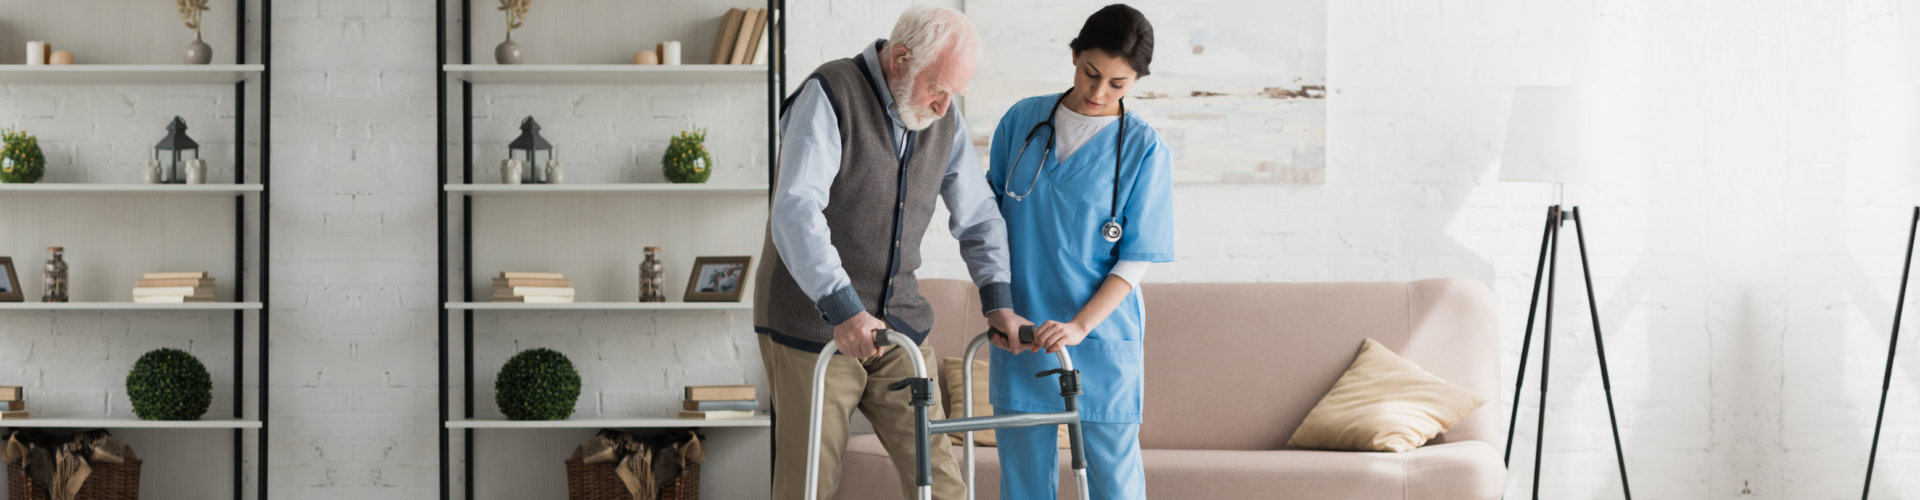 nurse assisting senior man